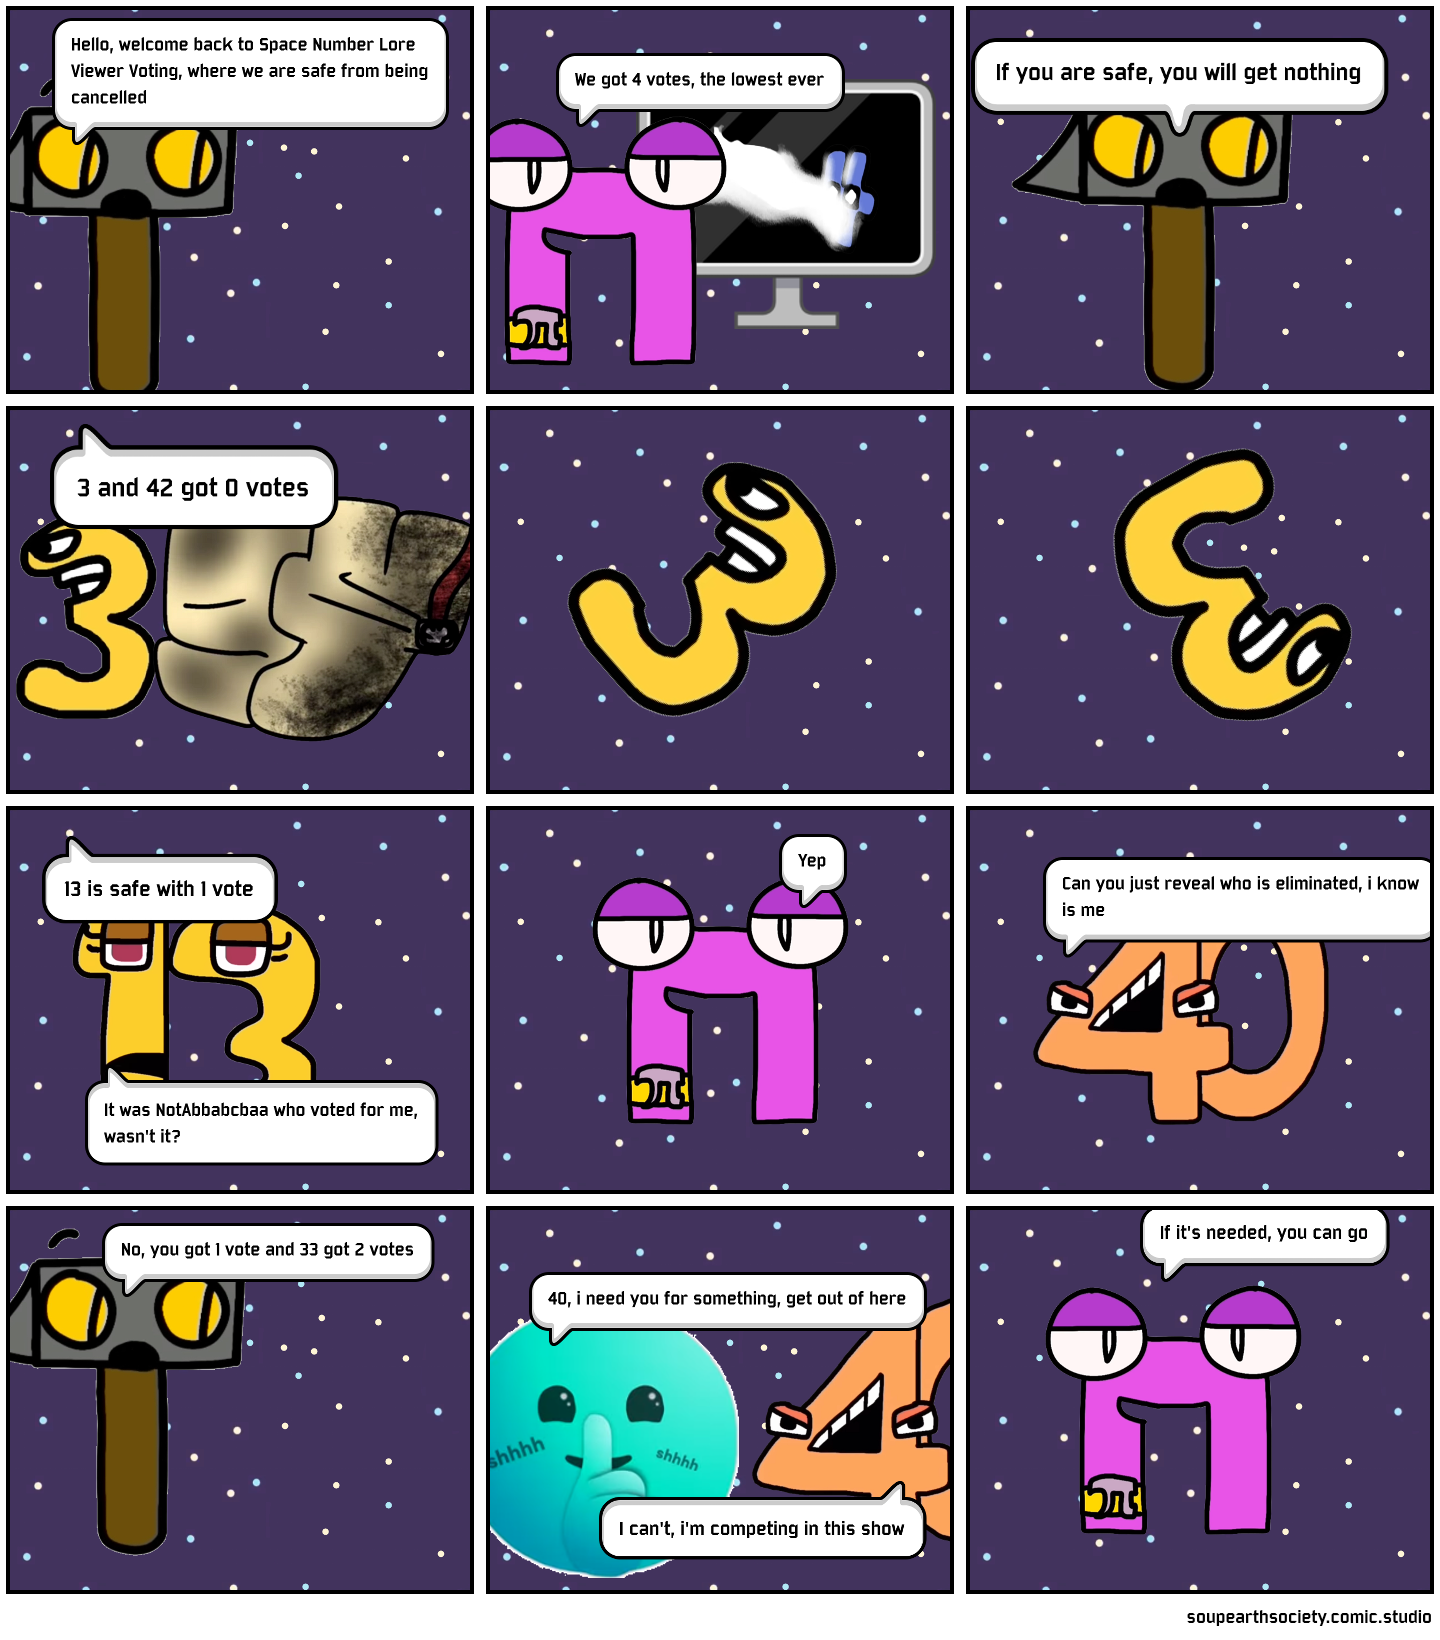 HKtito's Number Lore Comic Studio - make comics & memes with HKtito's Number  Lore characters